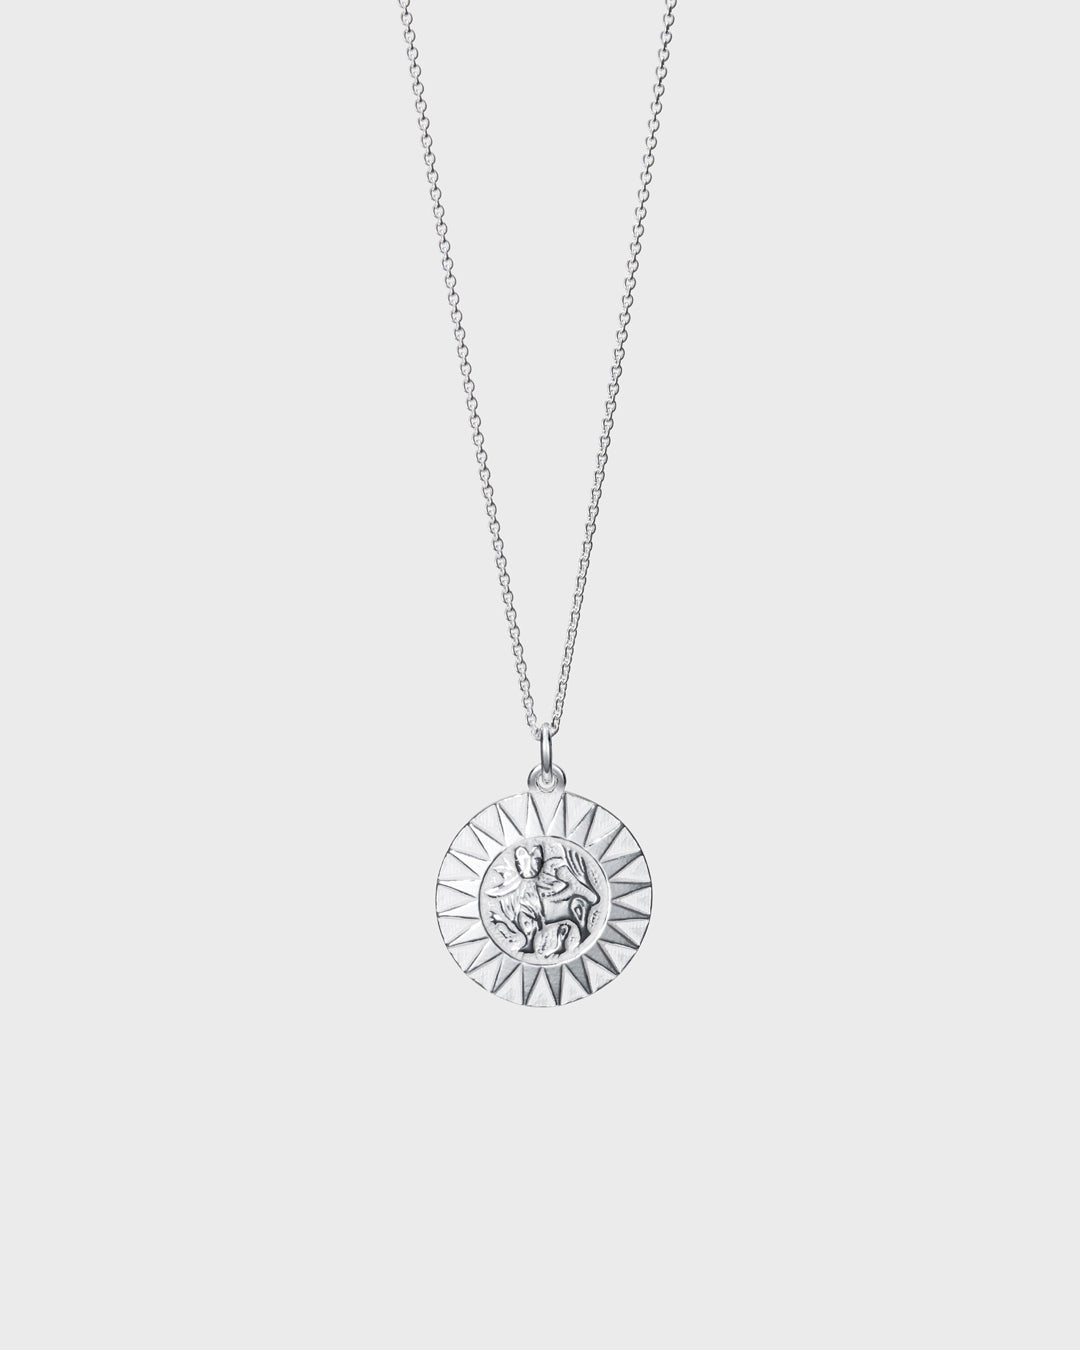 Amuletti Aurinkoleijona -lahjasetti hopea